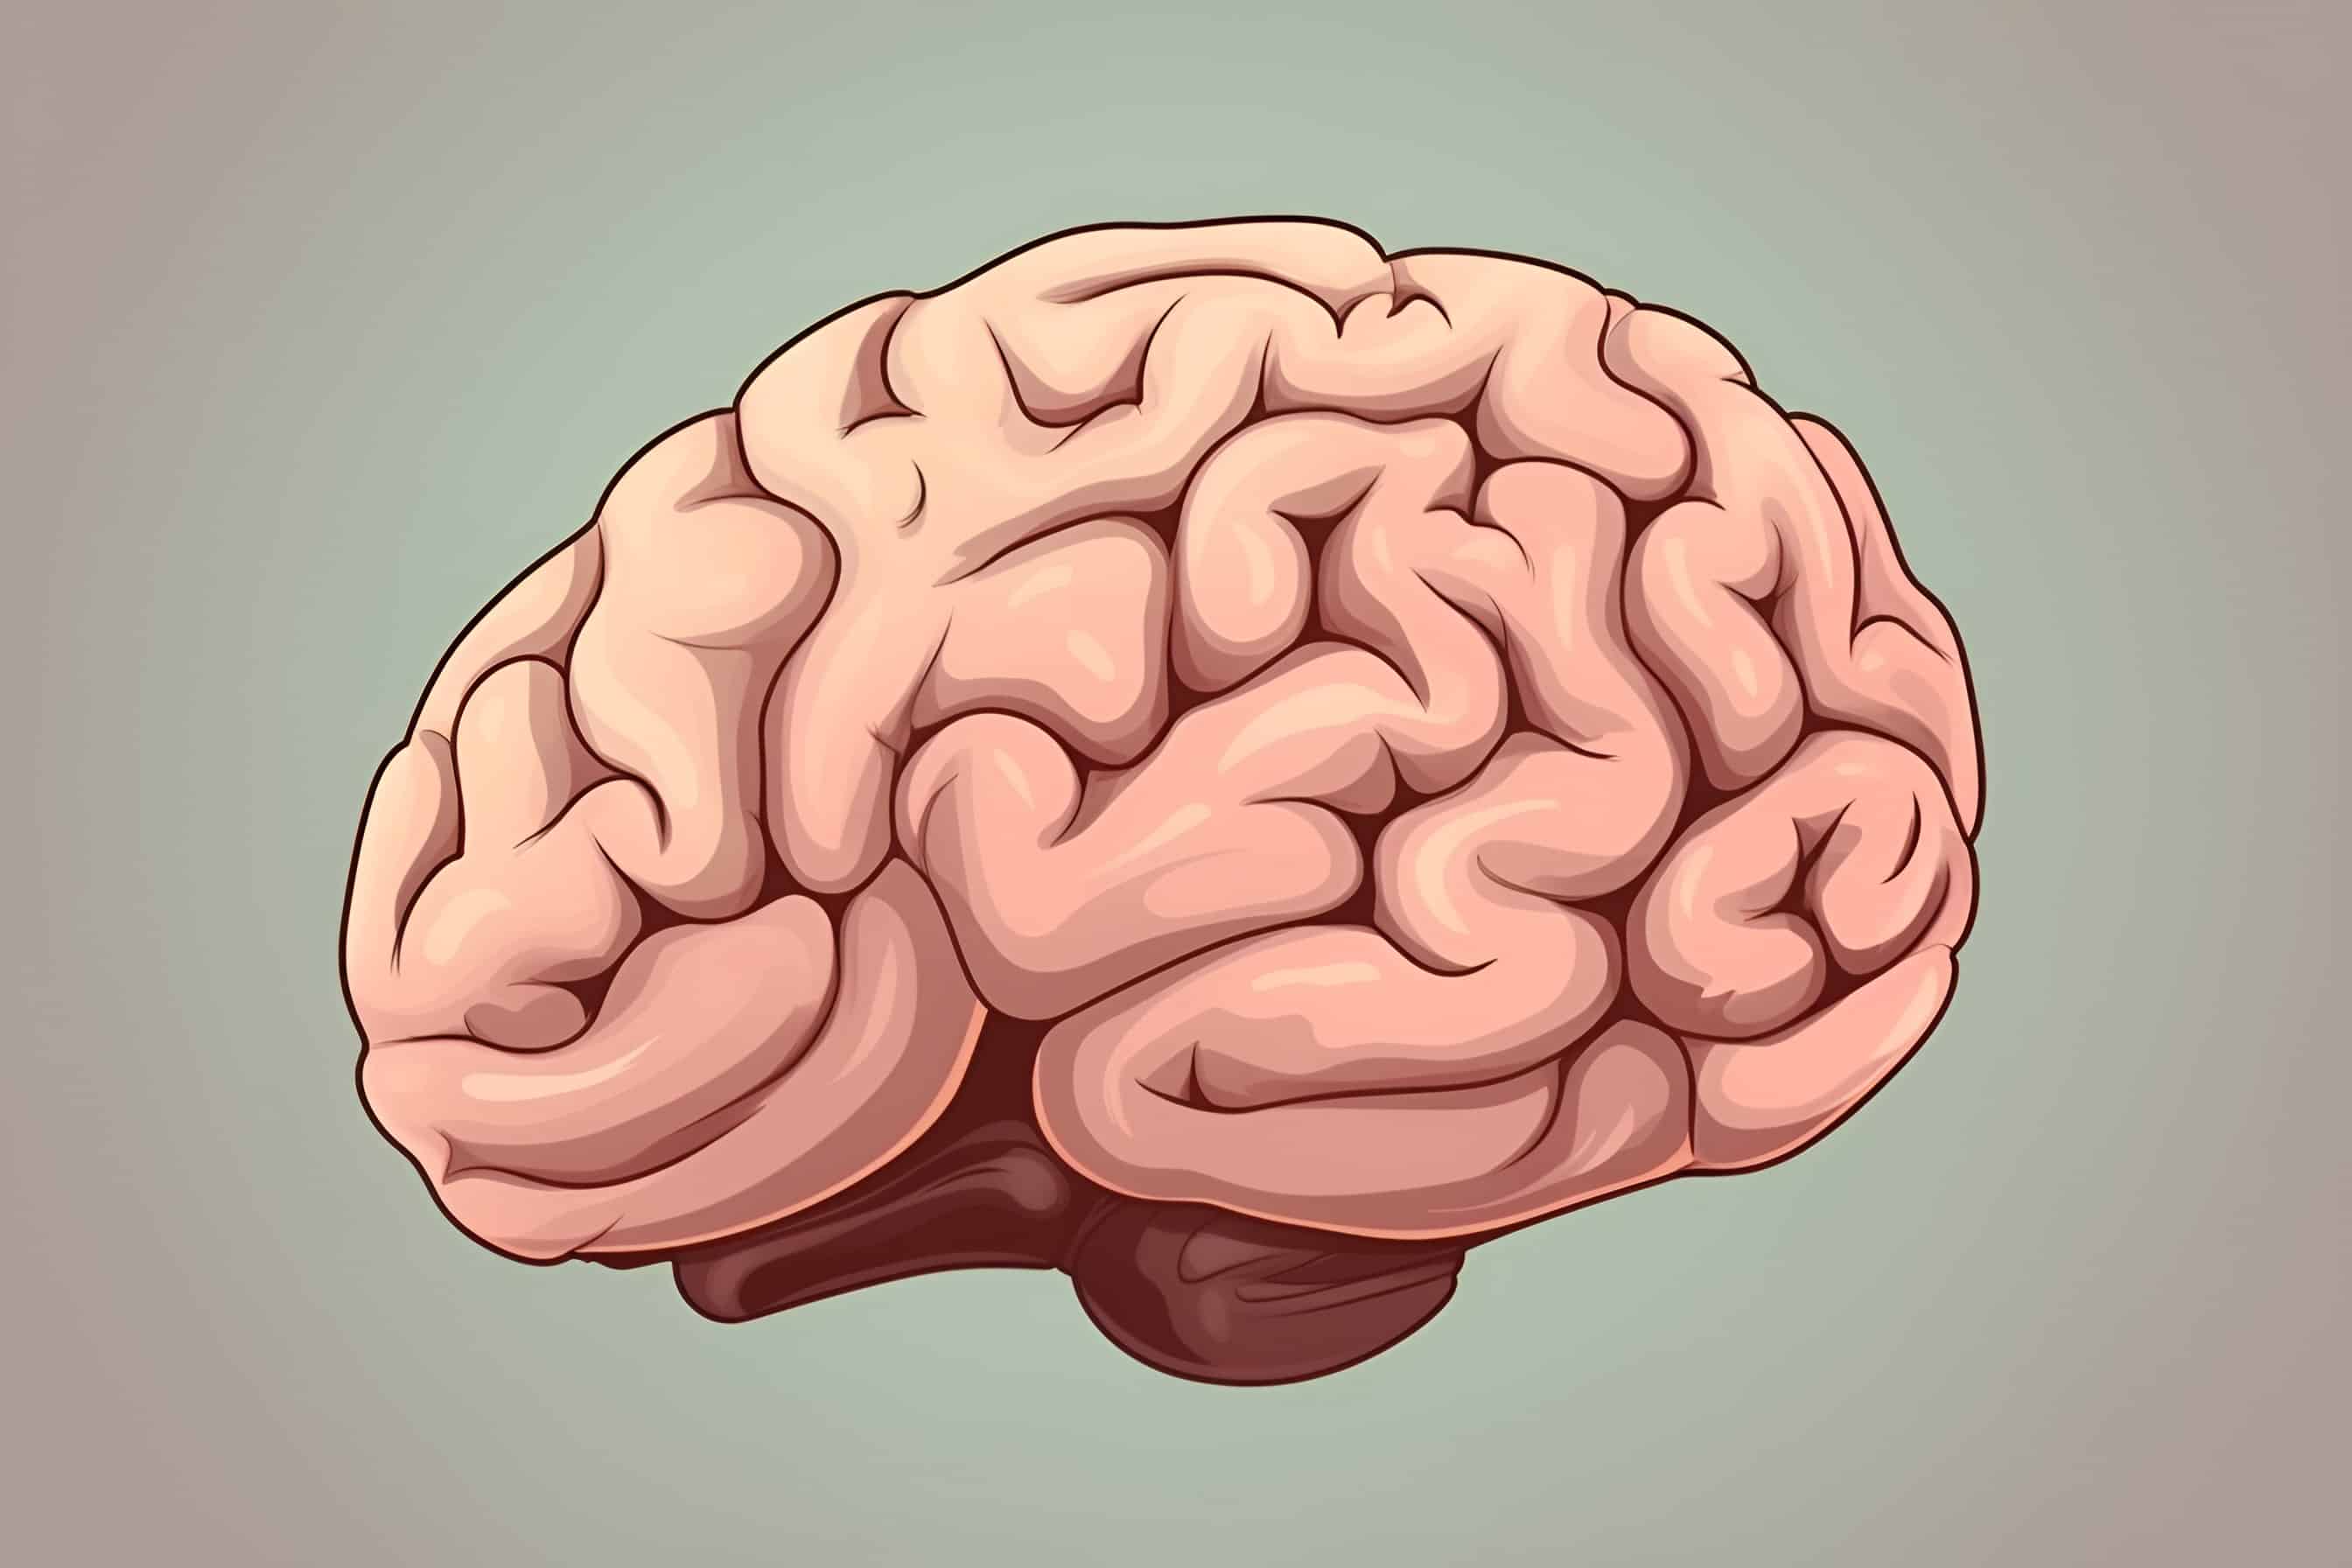 Сколько весит мозг человека?